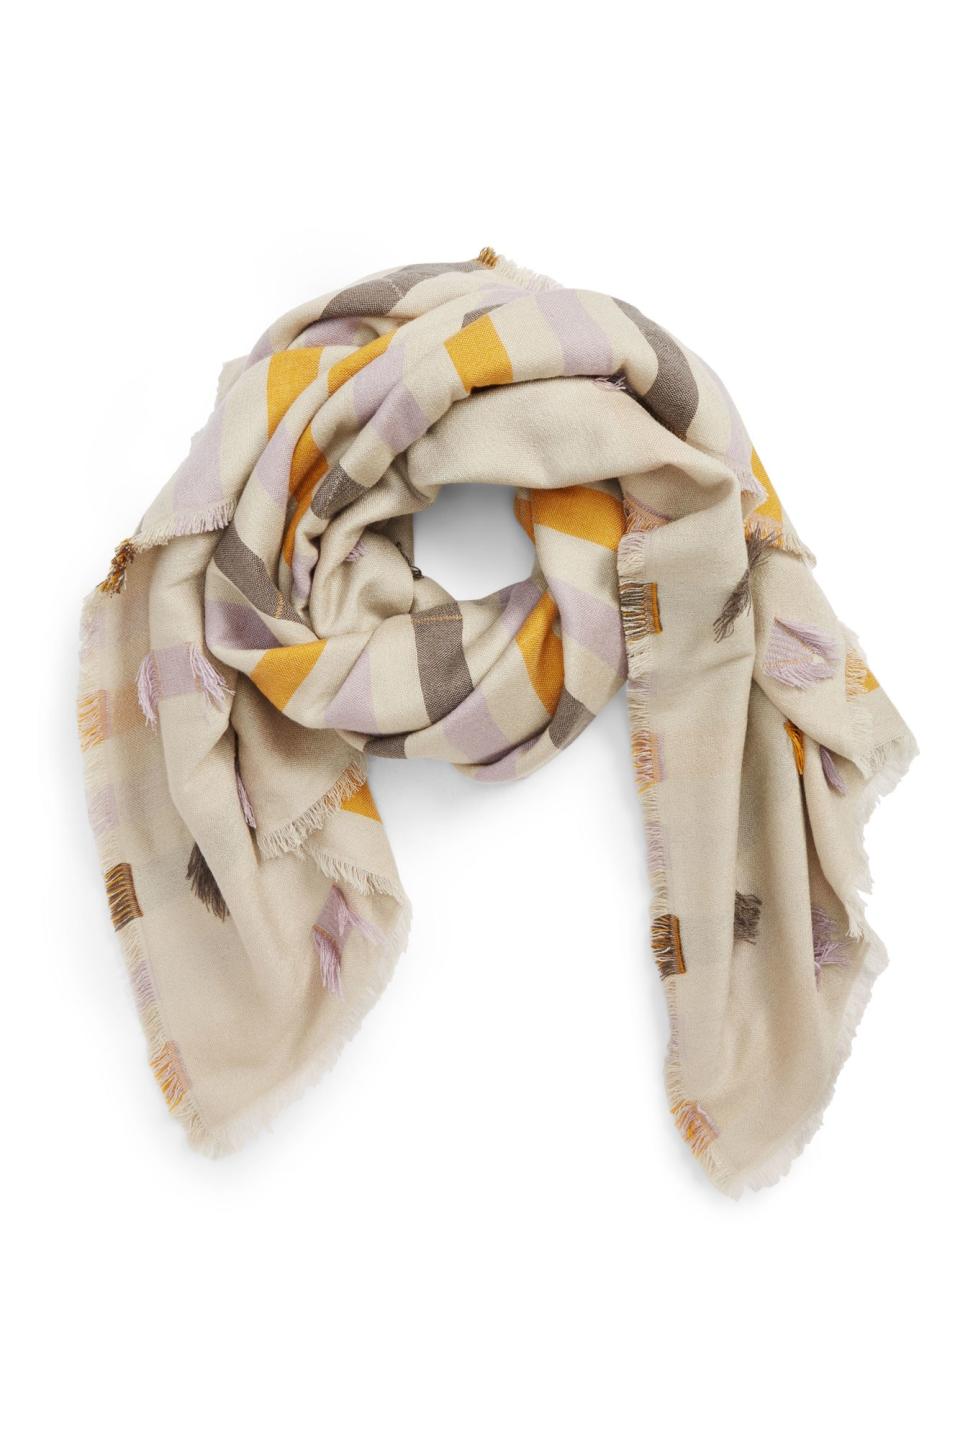 Madewell blanket scarf, $59.50